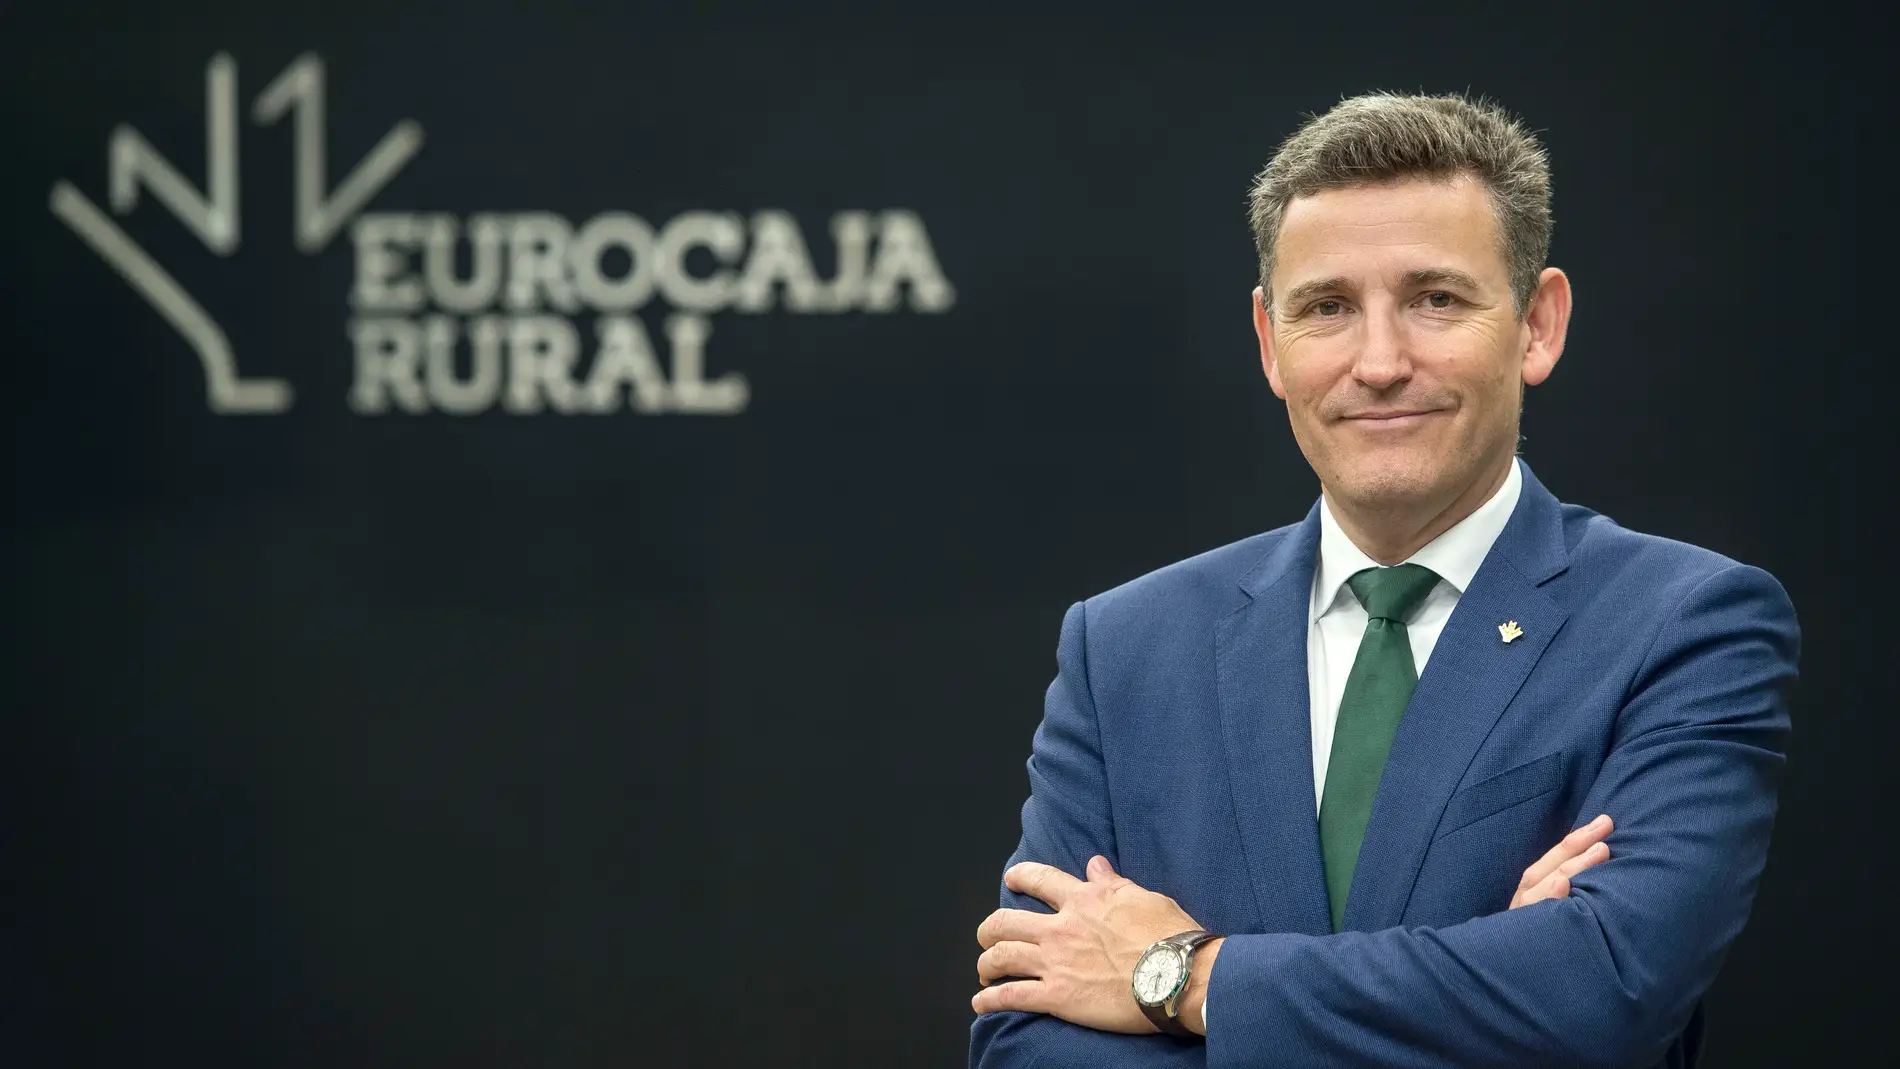 Eurocaja Rural alcanza un beneficio de 101 millones de euros